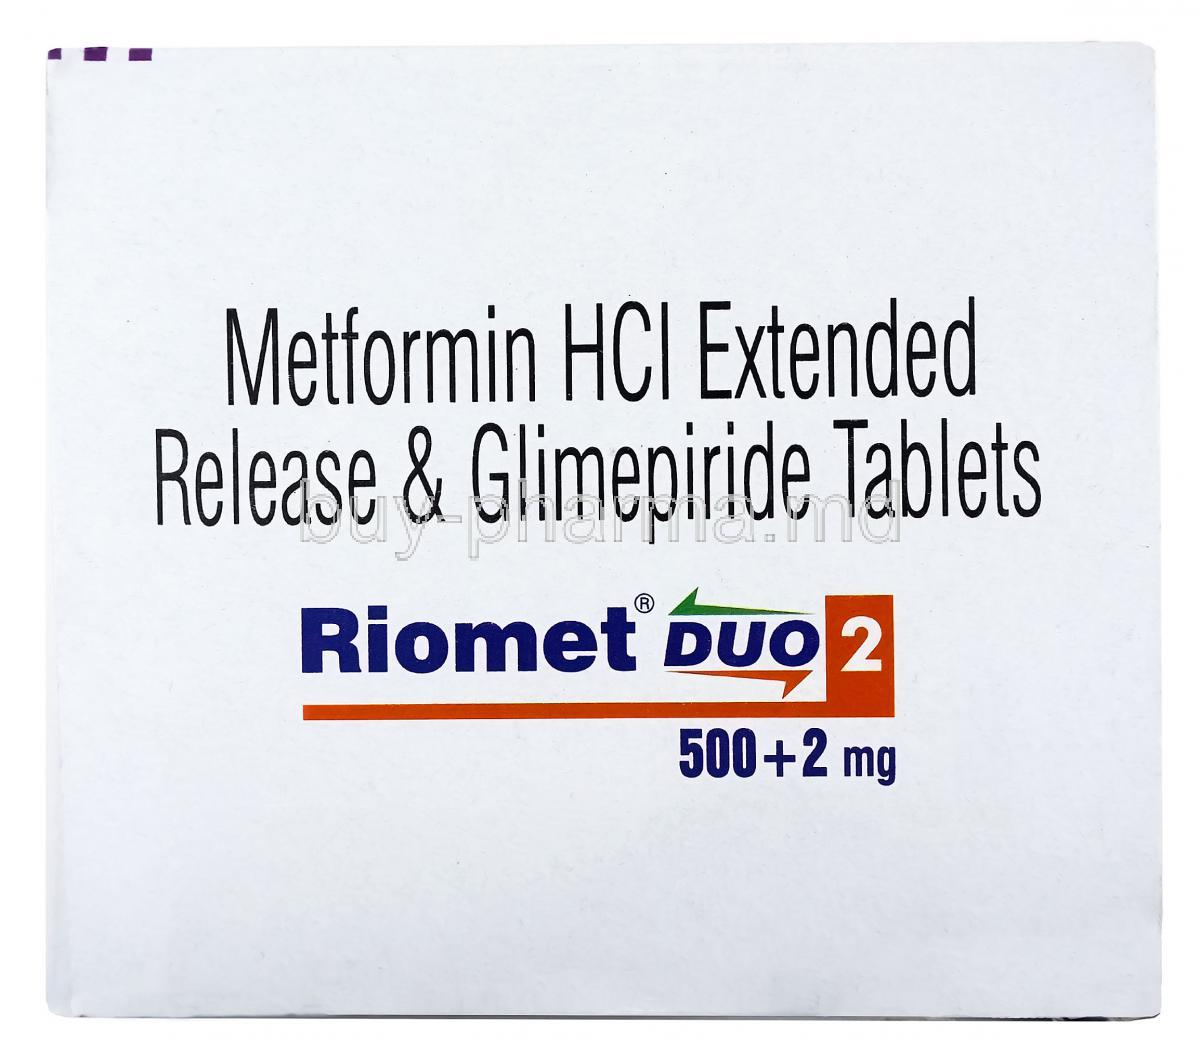 Riomet DUO 2 XR, Metformin and Glimepiride